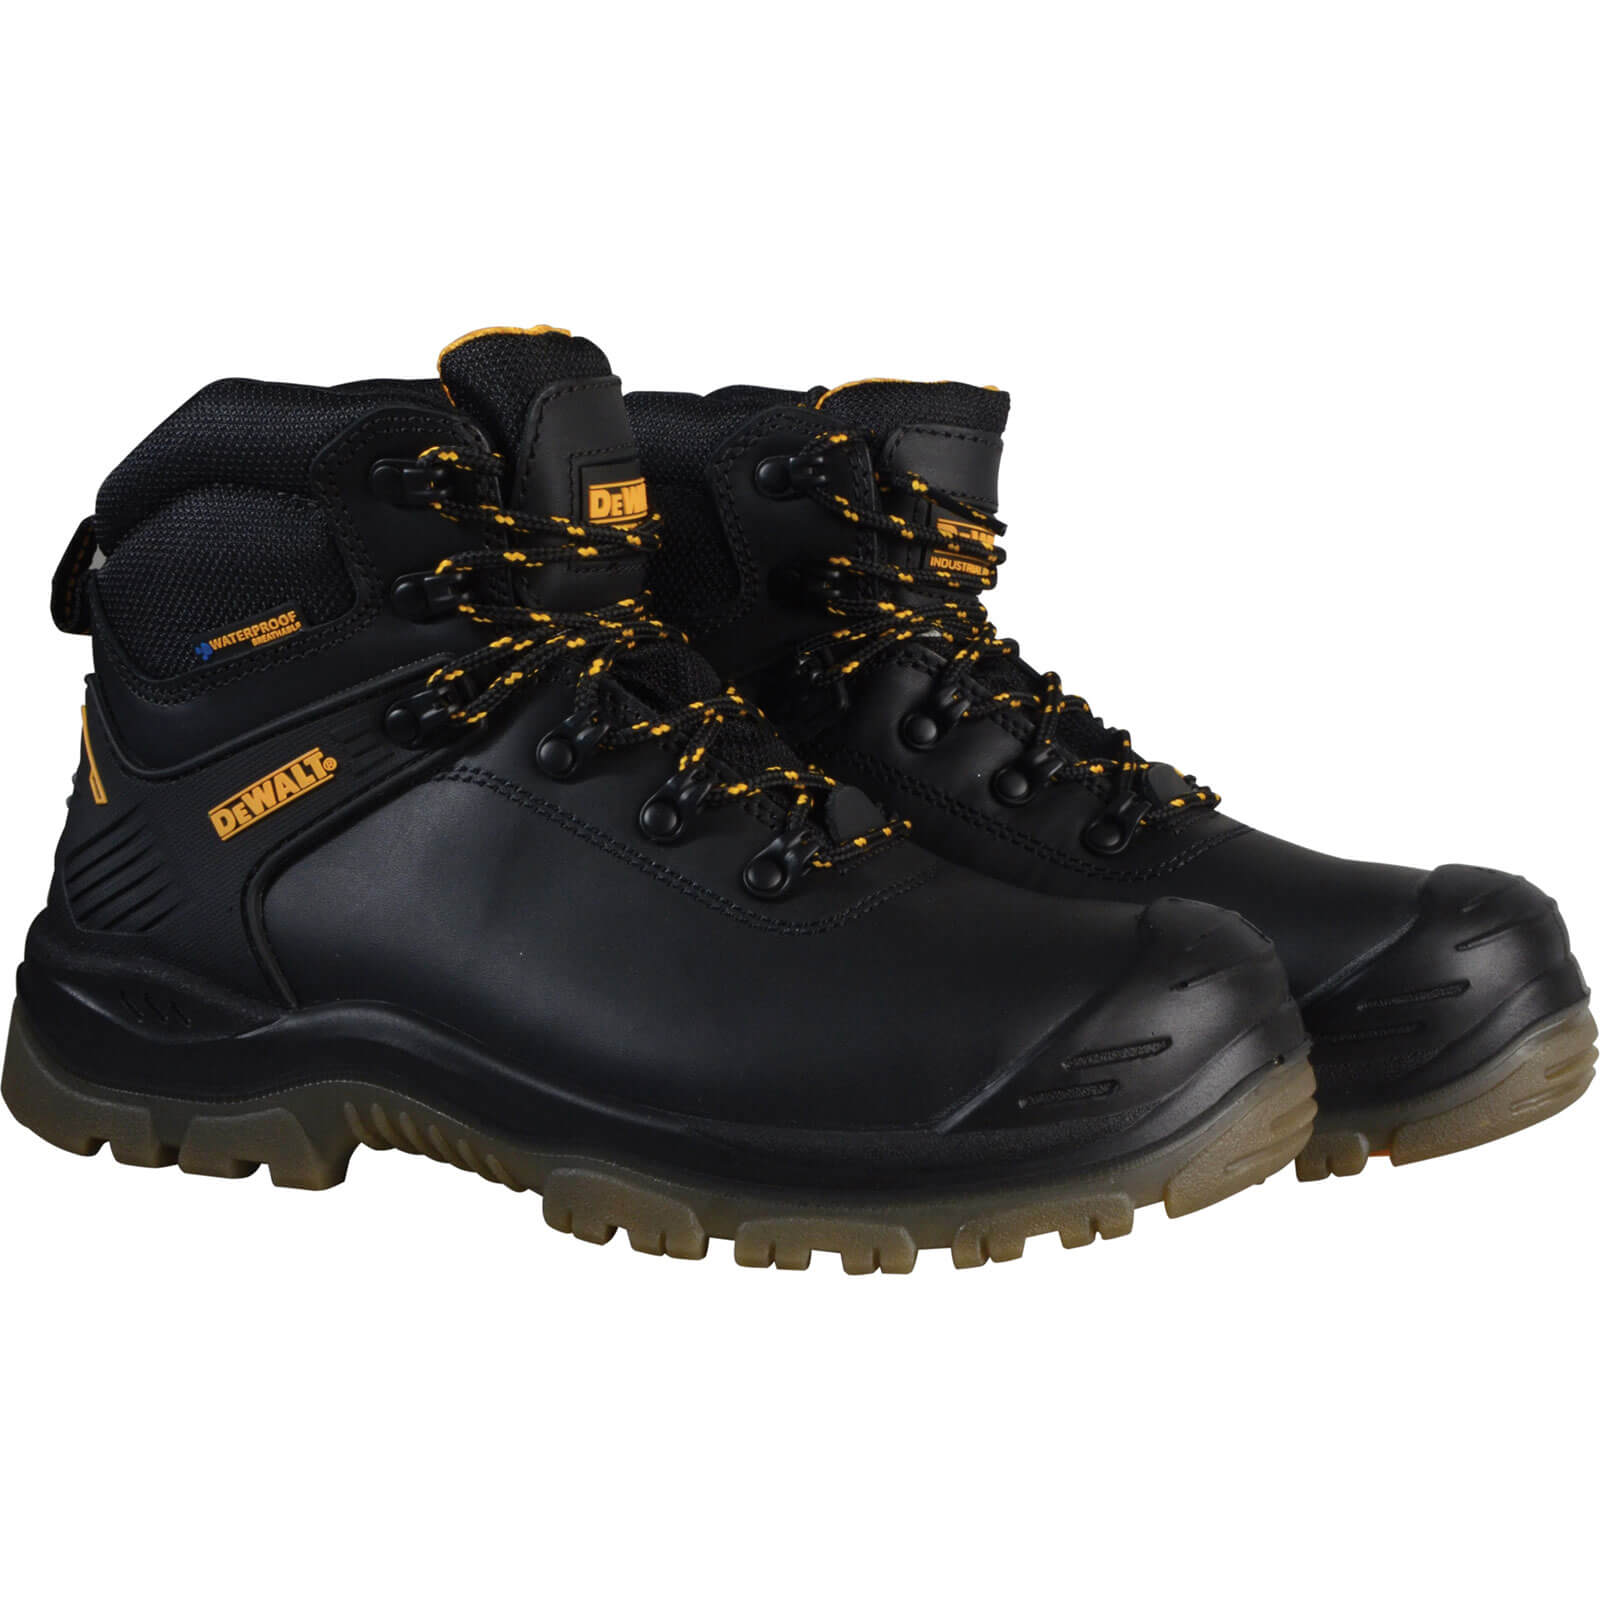 DeWalt Newark Waterproof Safety Hiker Boots Black Size 9